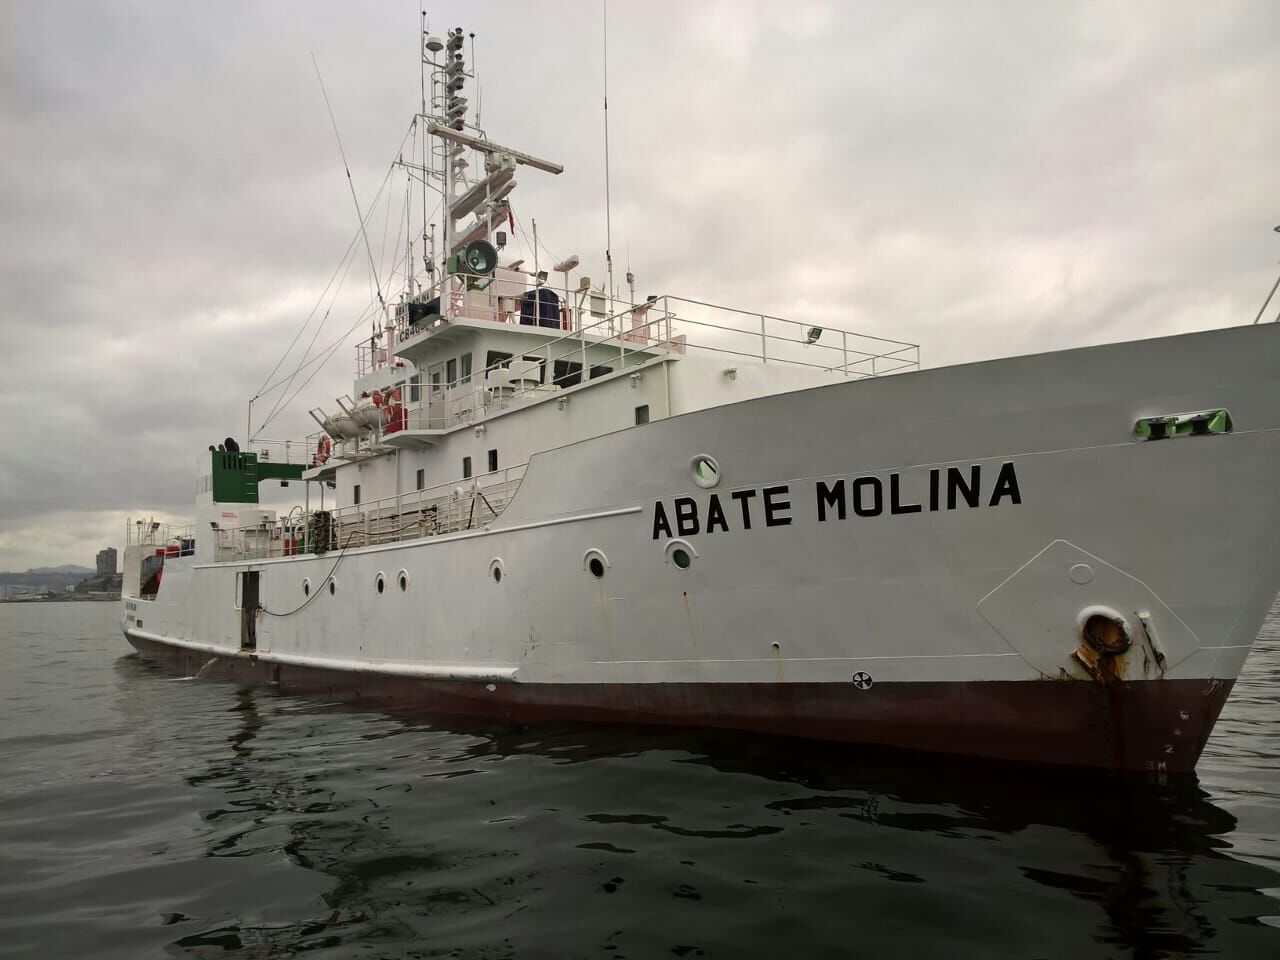 Abate Molina Zarpó a investigar la merluza común